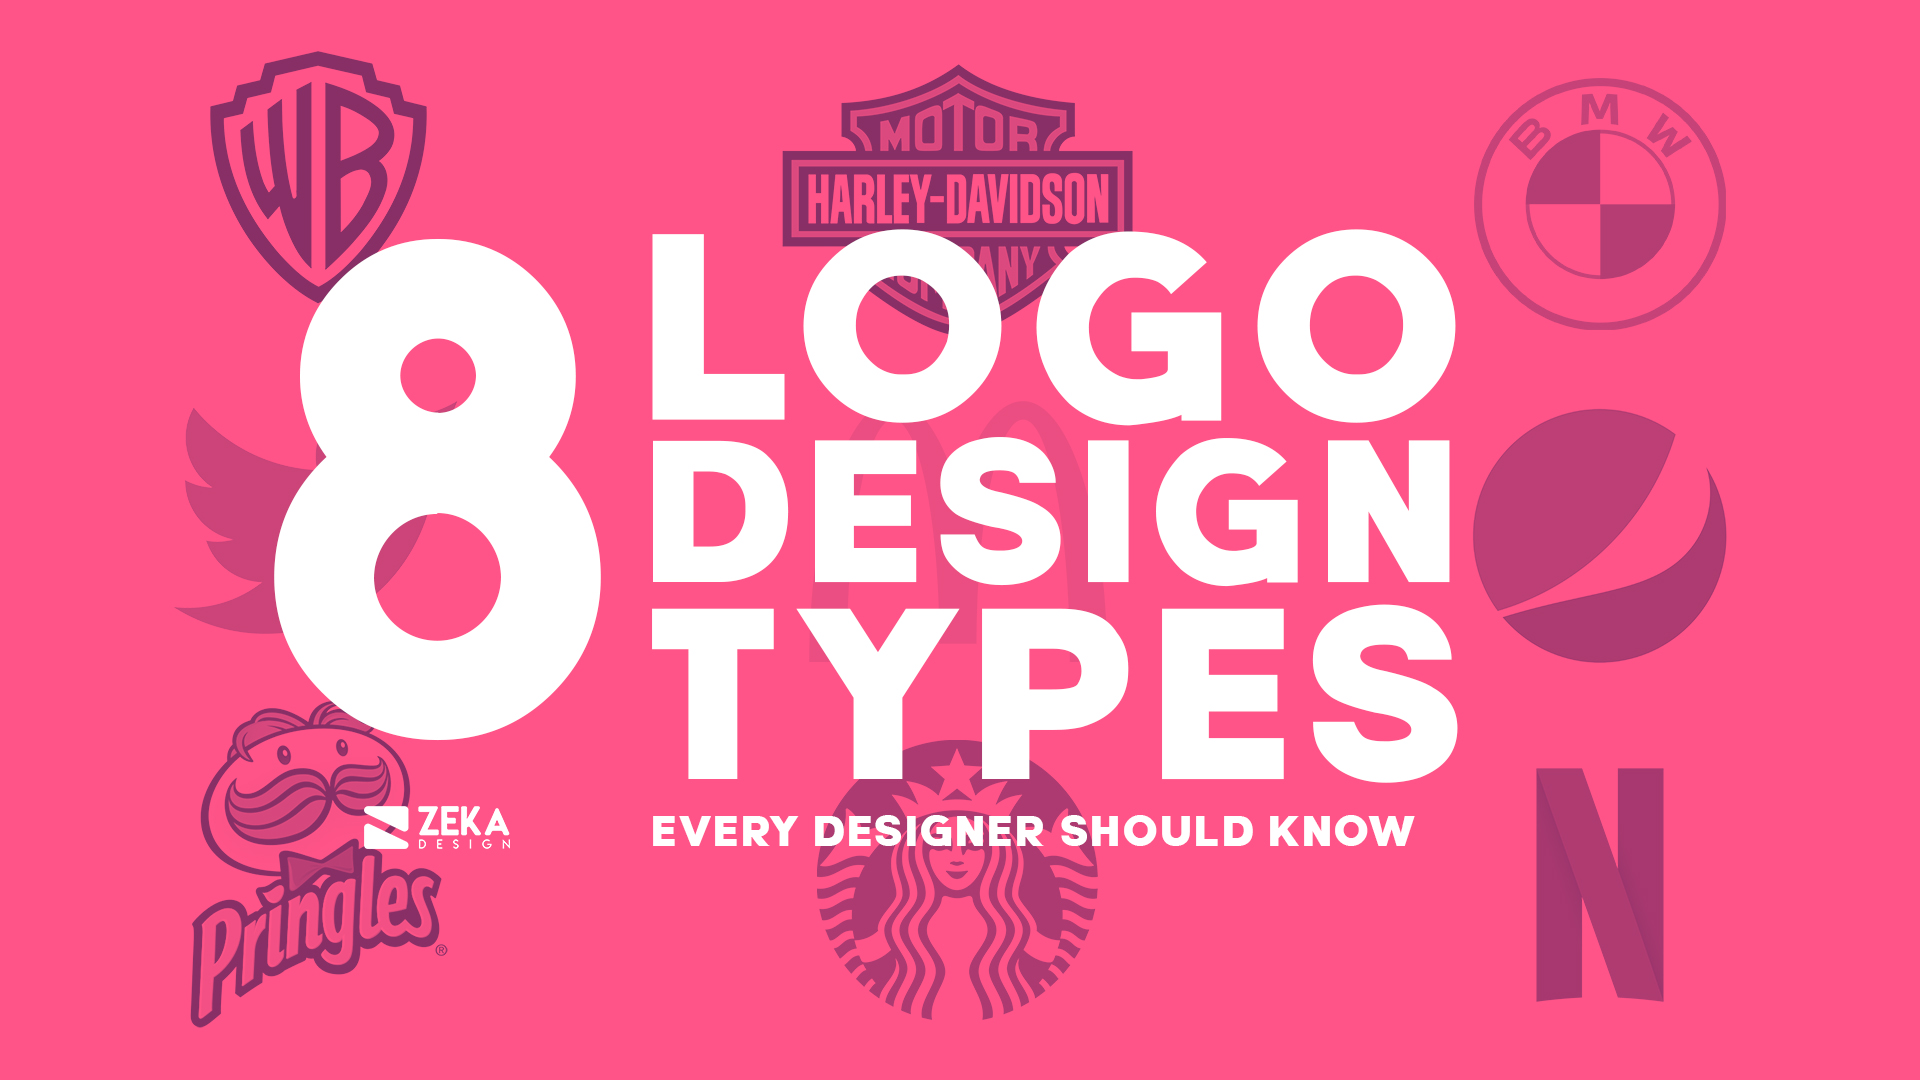 8 Logo Design Types - Zeka Design